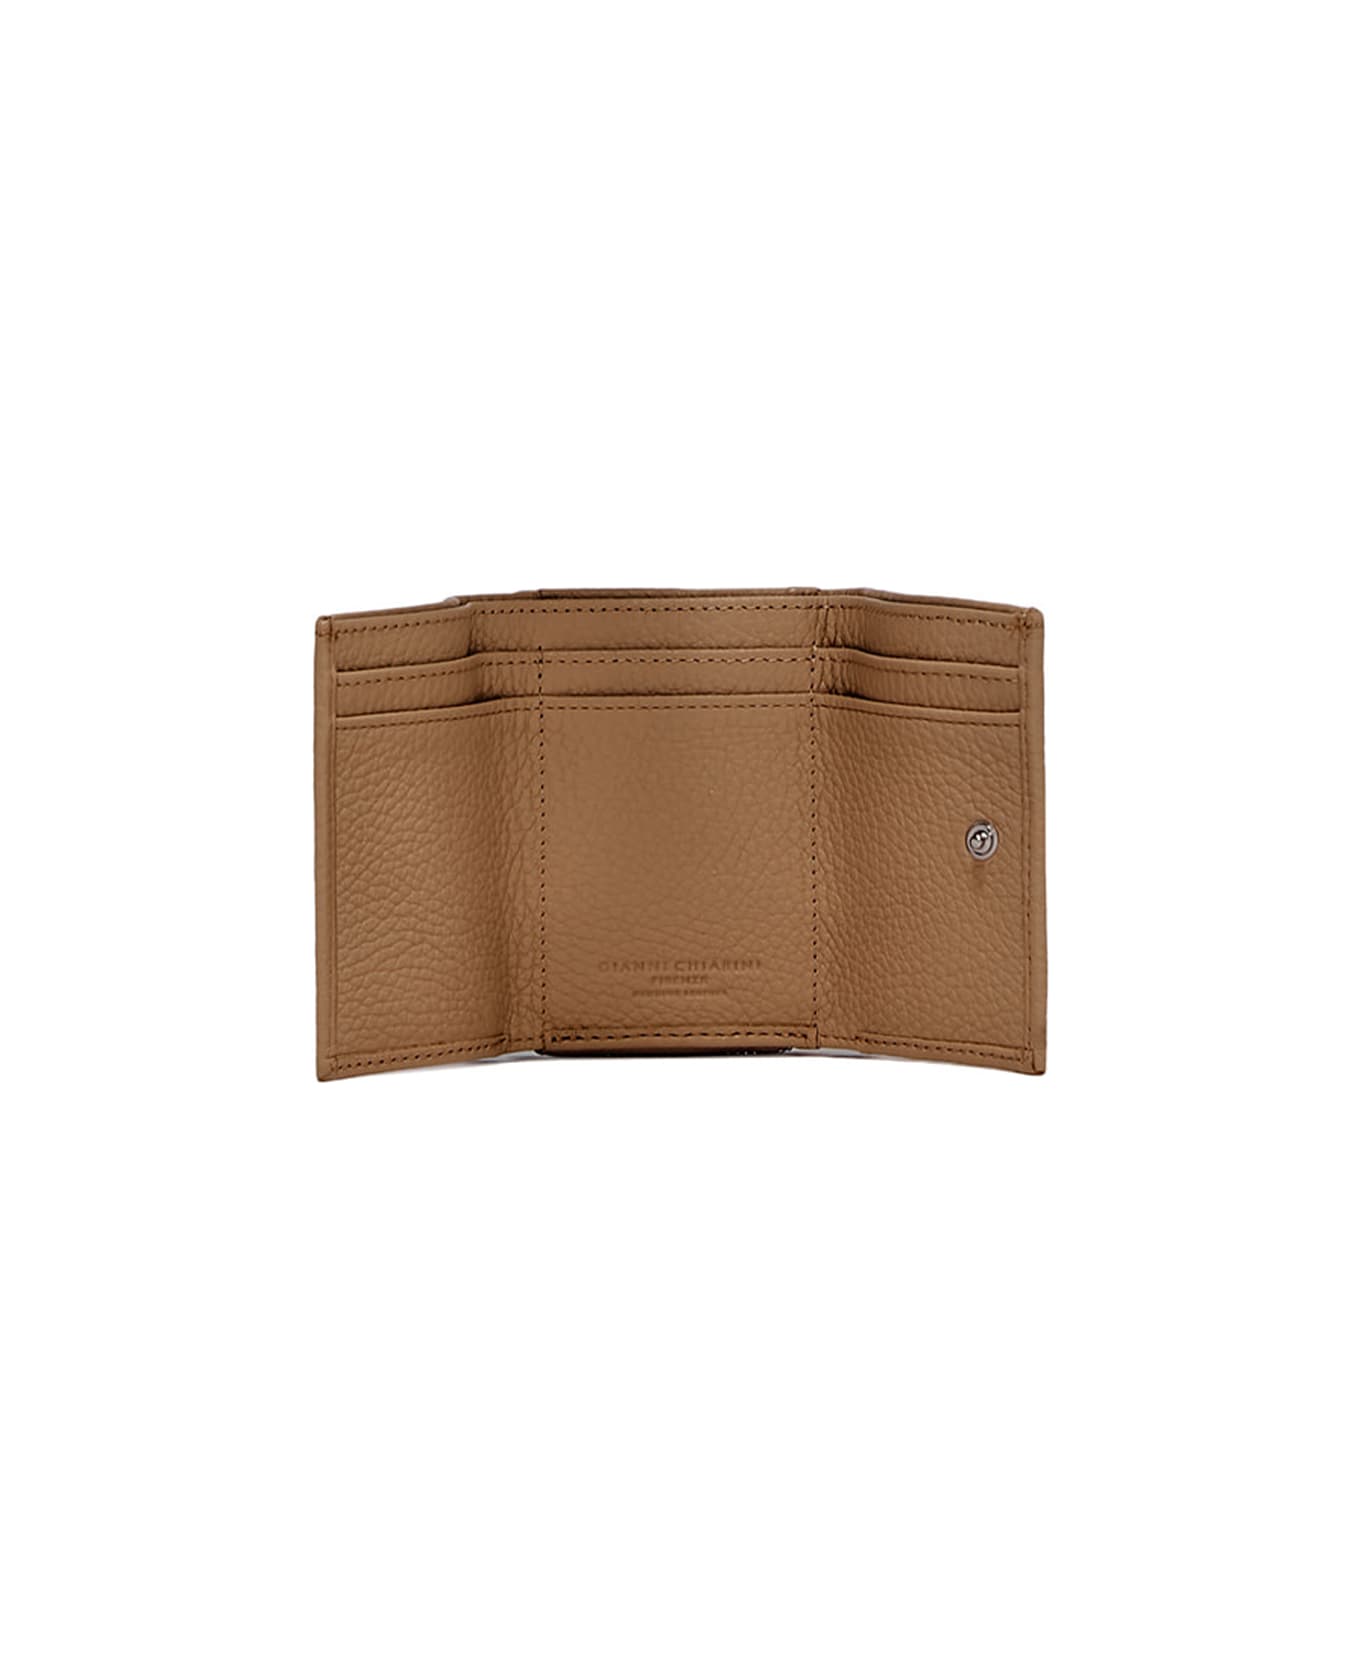 Gianni Chiarini Wallets Dollaro Leather Wallet With Button - NATURE